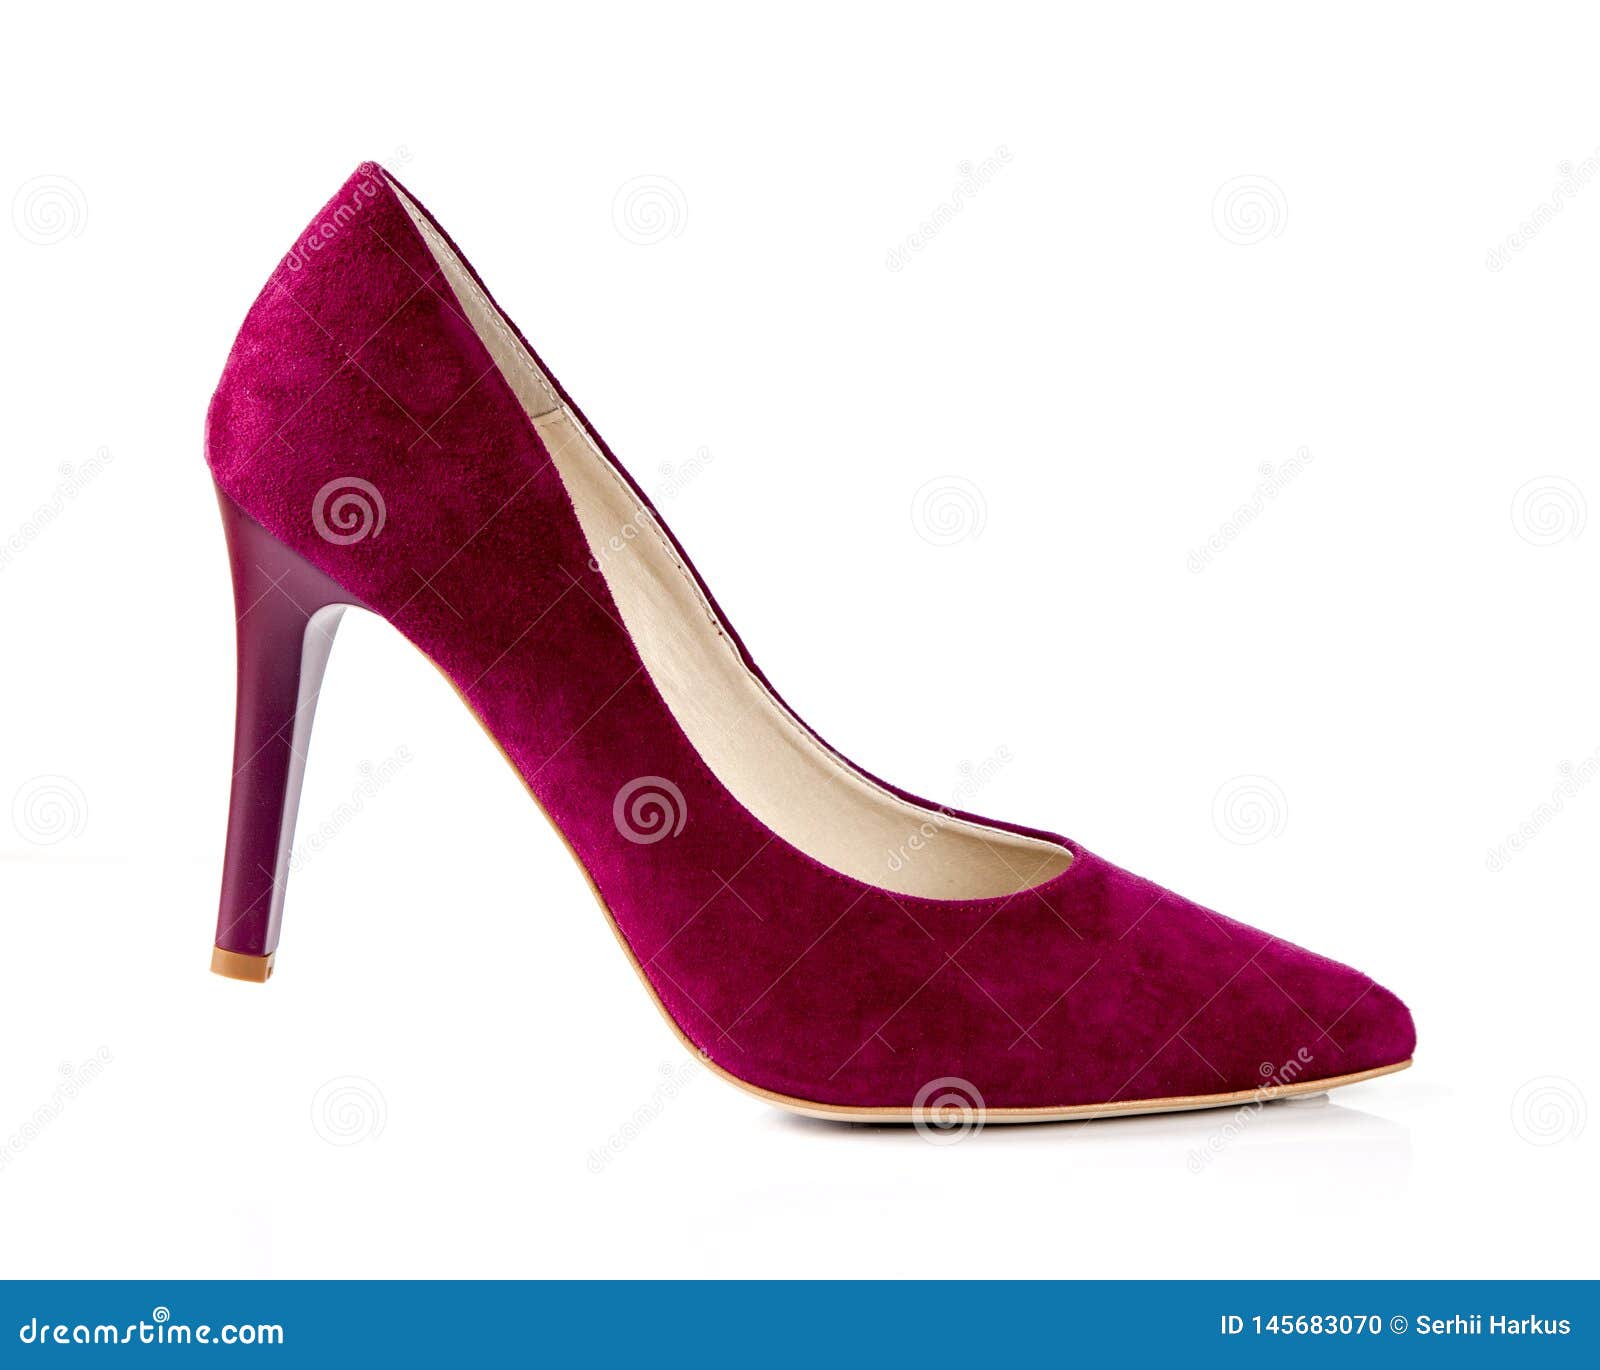 ASOS DESIGN Hostess platform heeled sandals in magenta | Sandals heels, Magenta  heels, Platform sandals heels